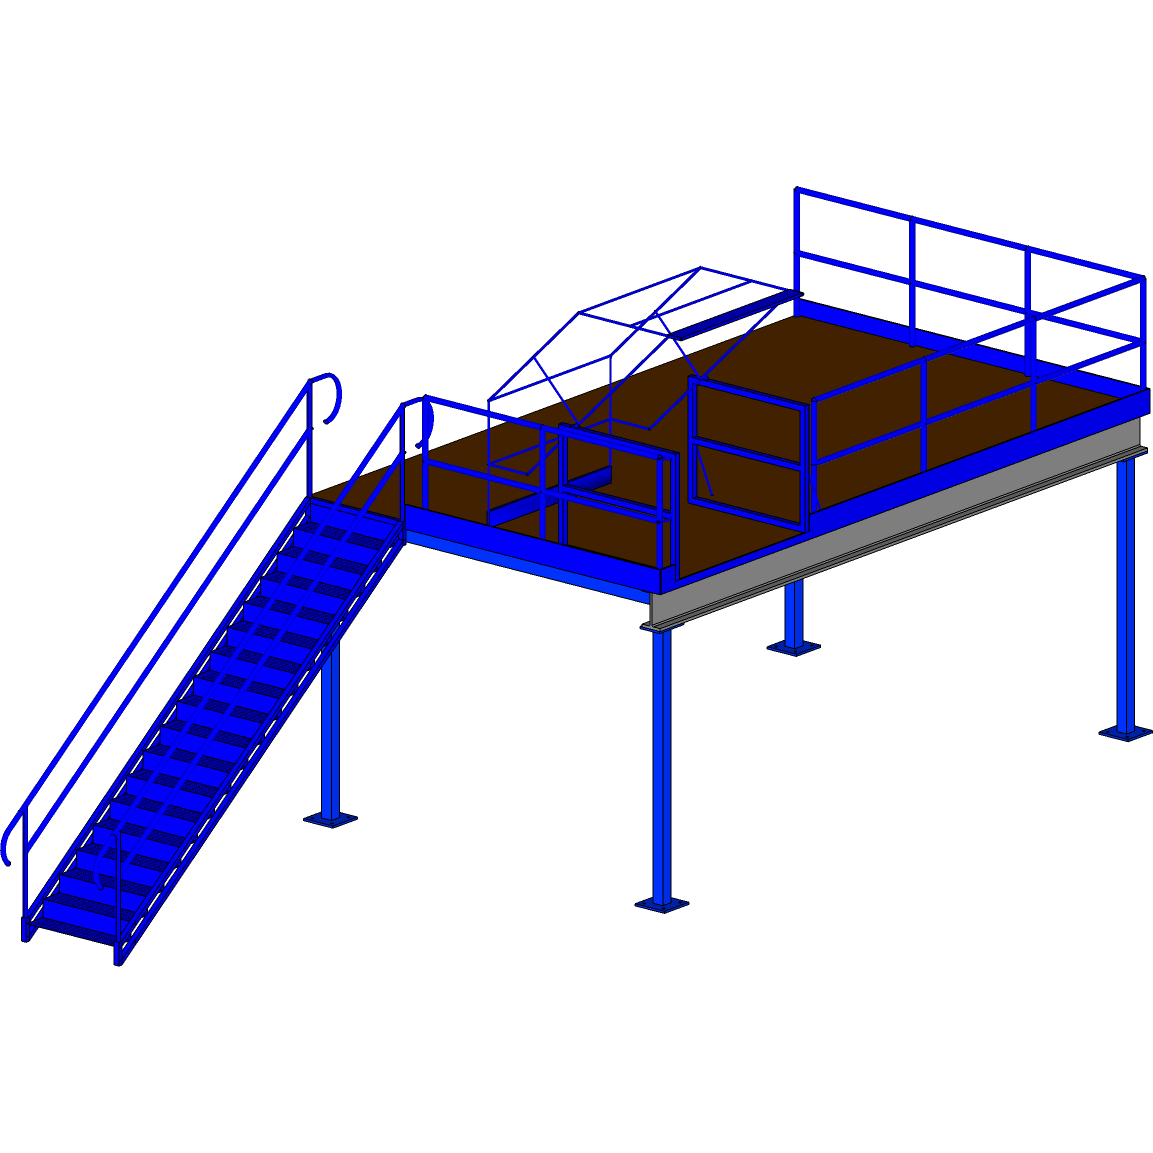 Structural mezzanine rendering